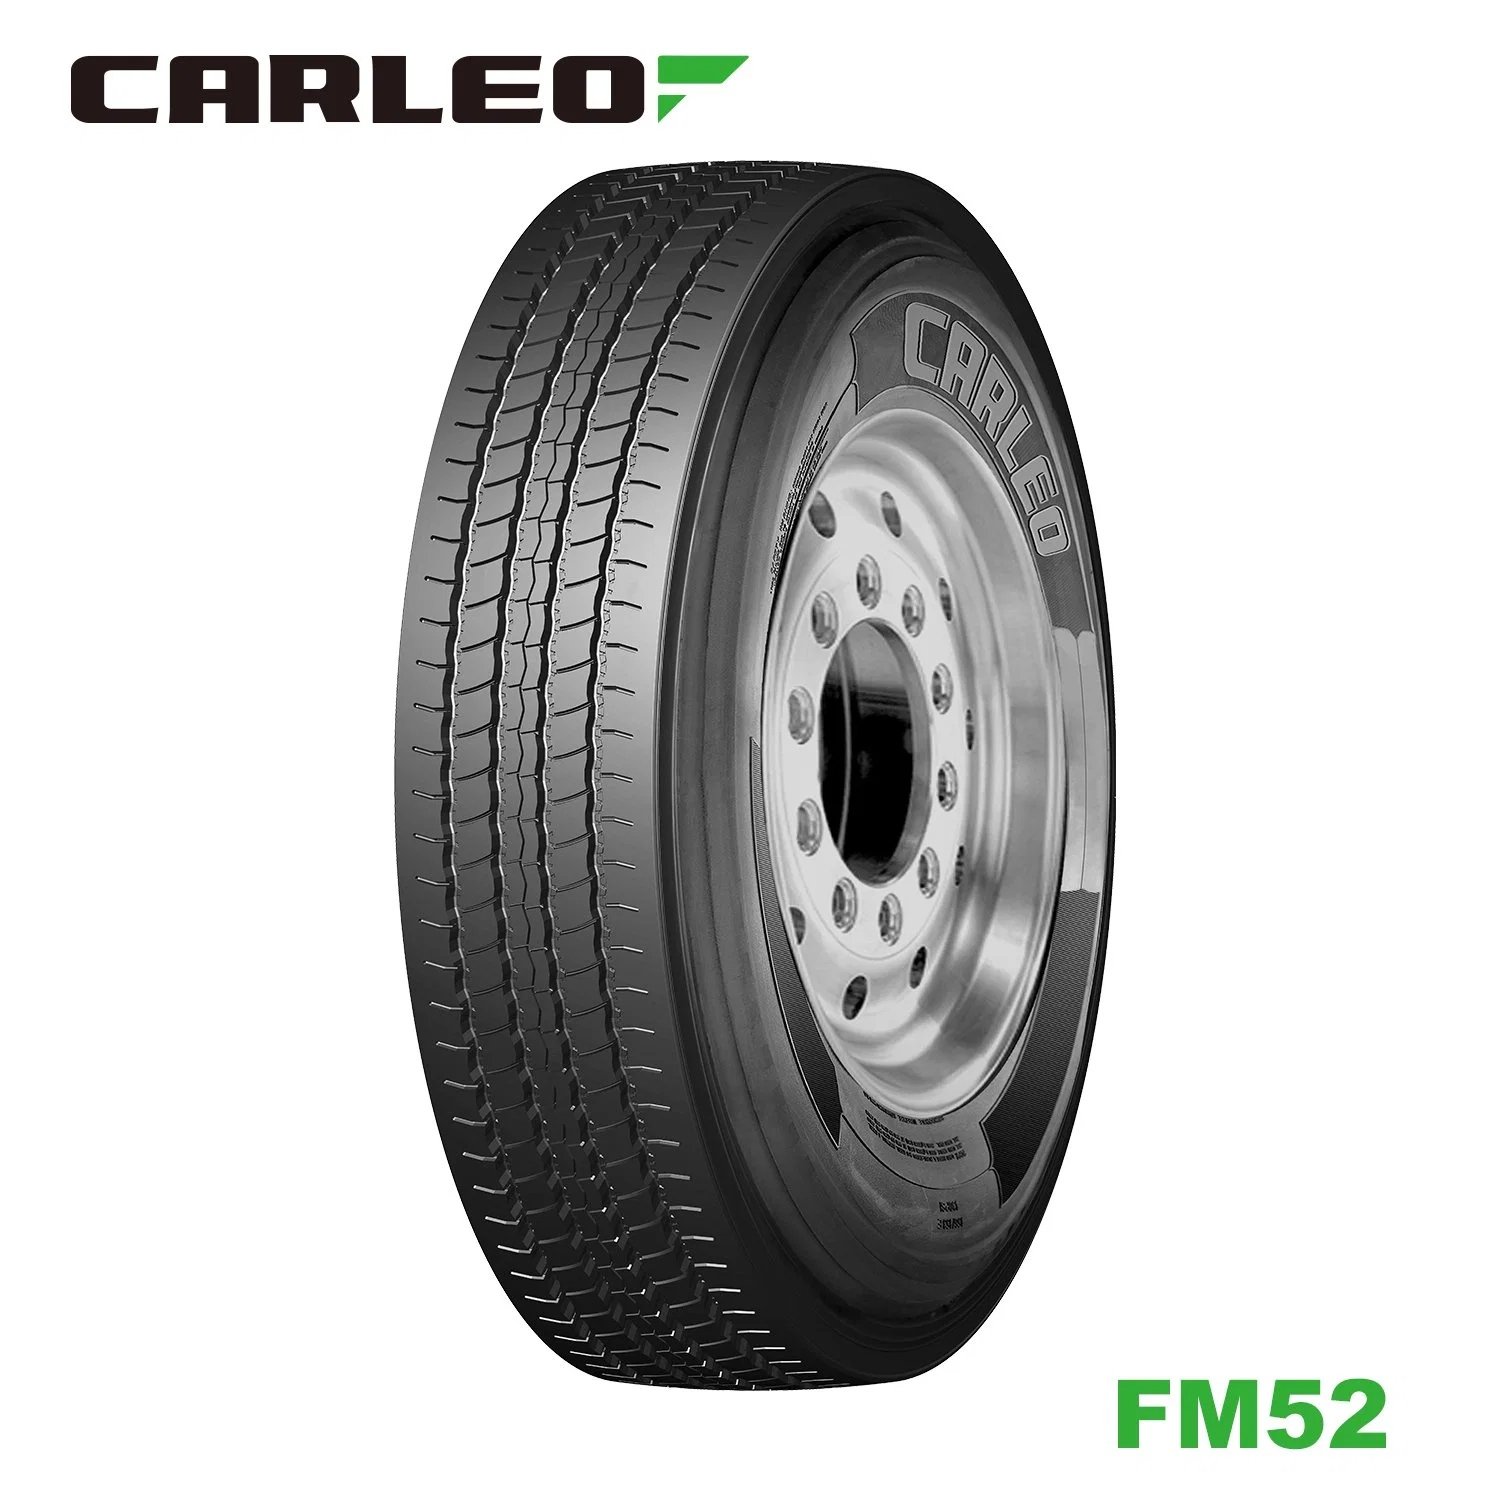 Carleo Brand TBR Tire 235/75r17.5 FM52 Dh56